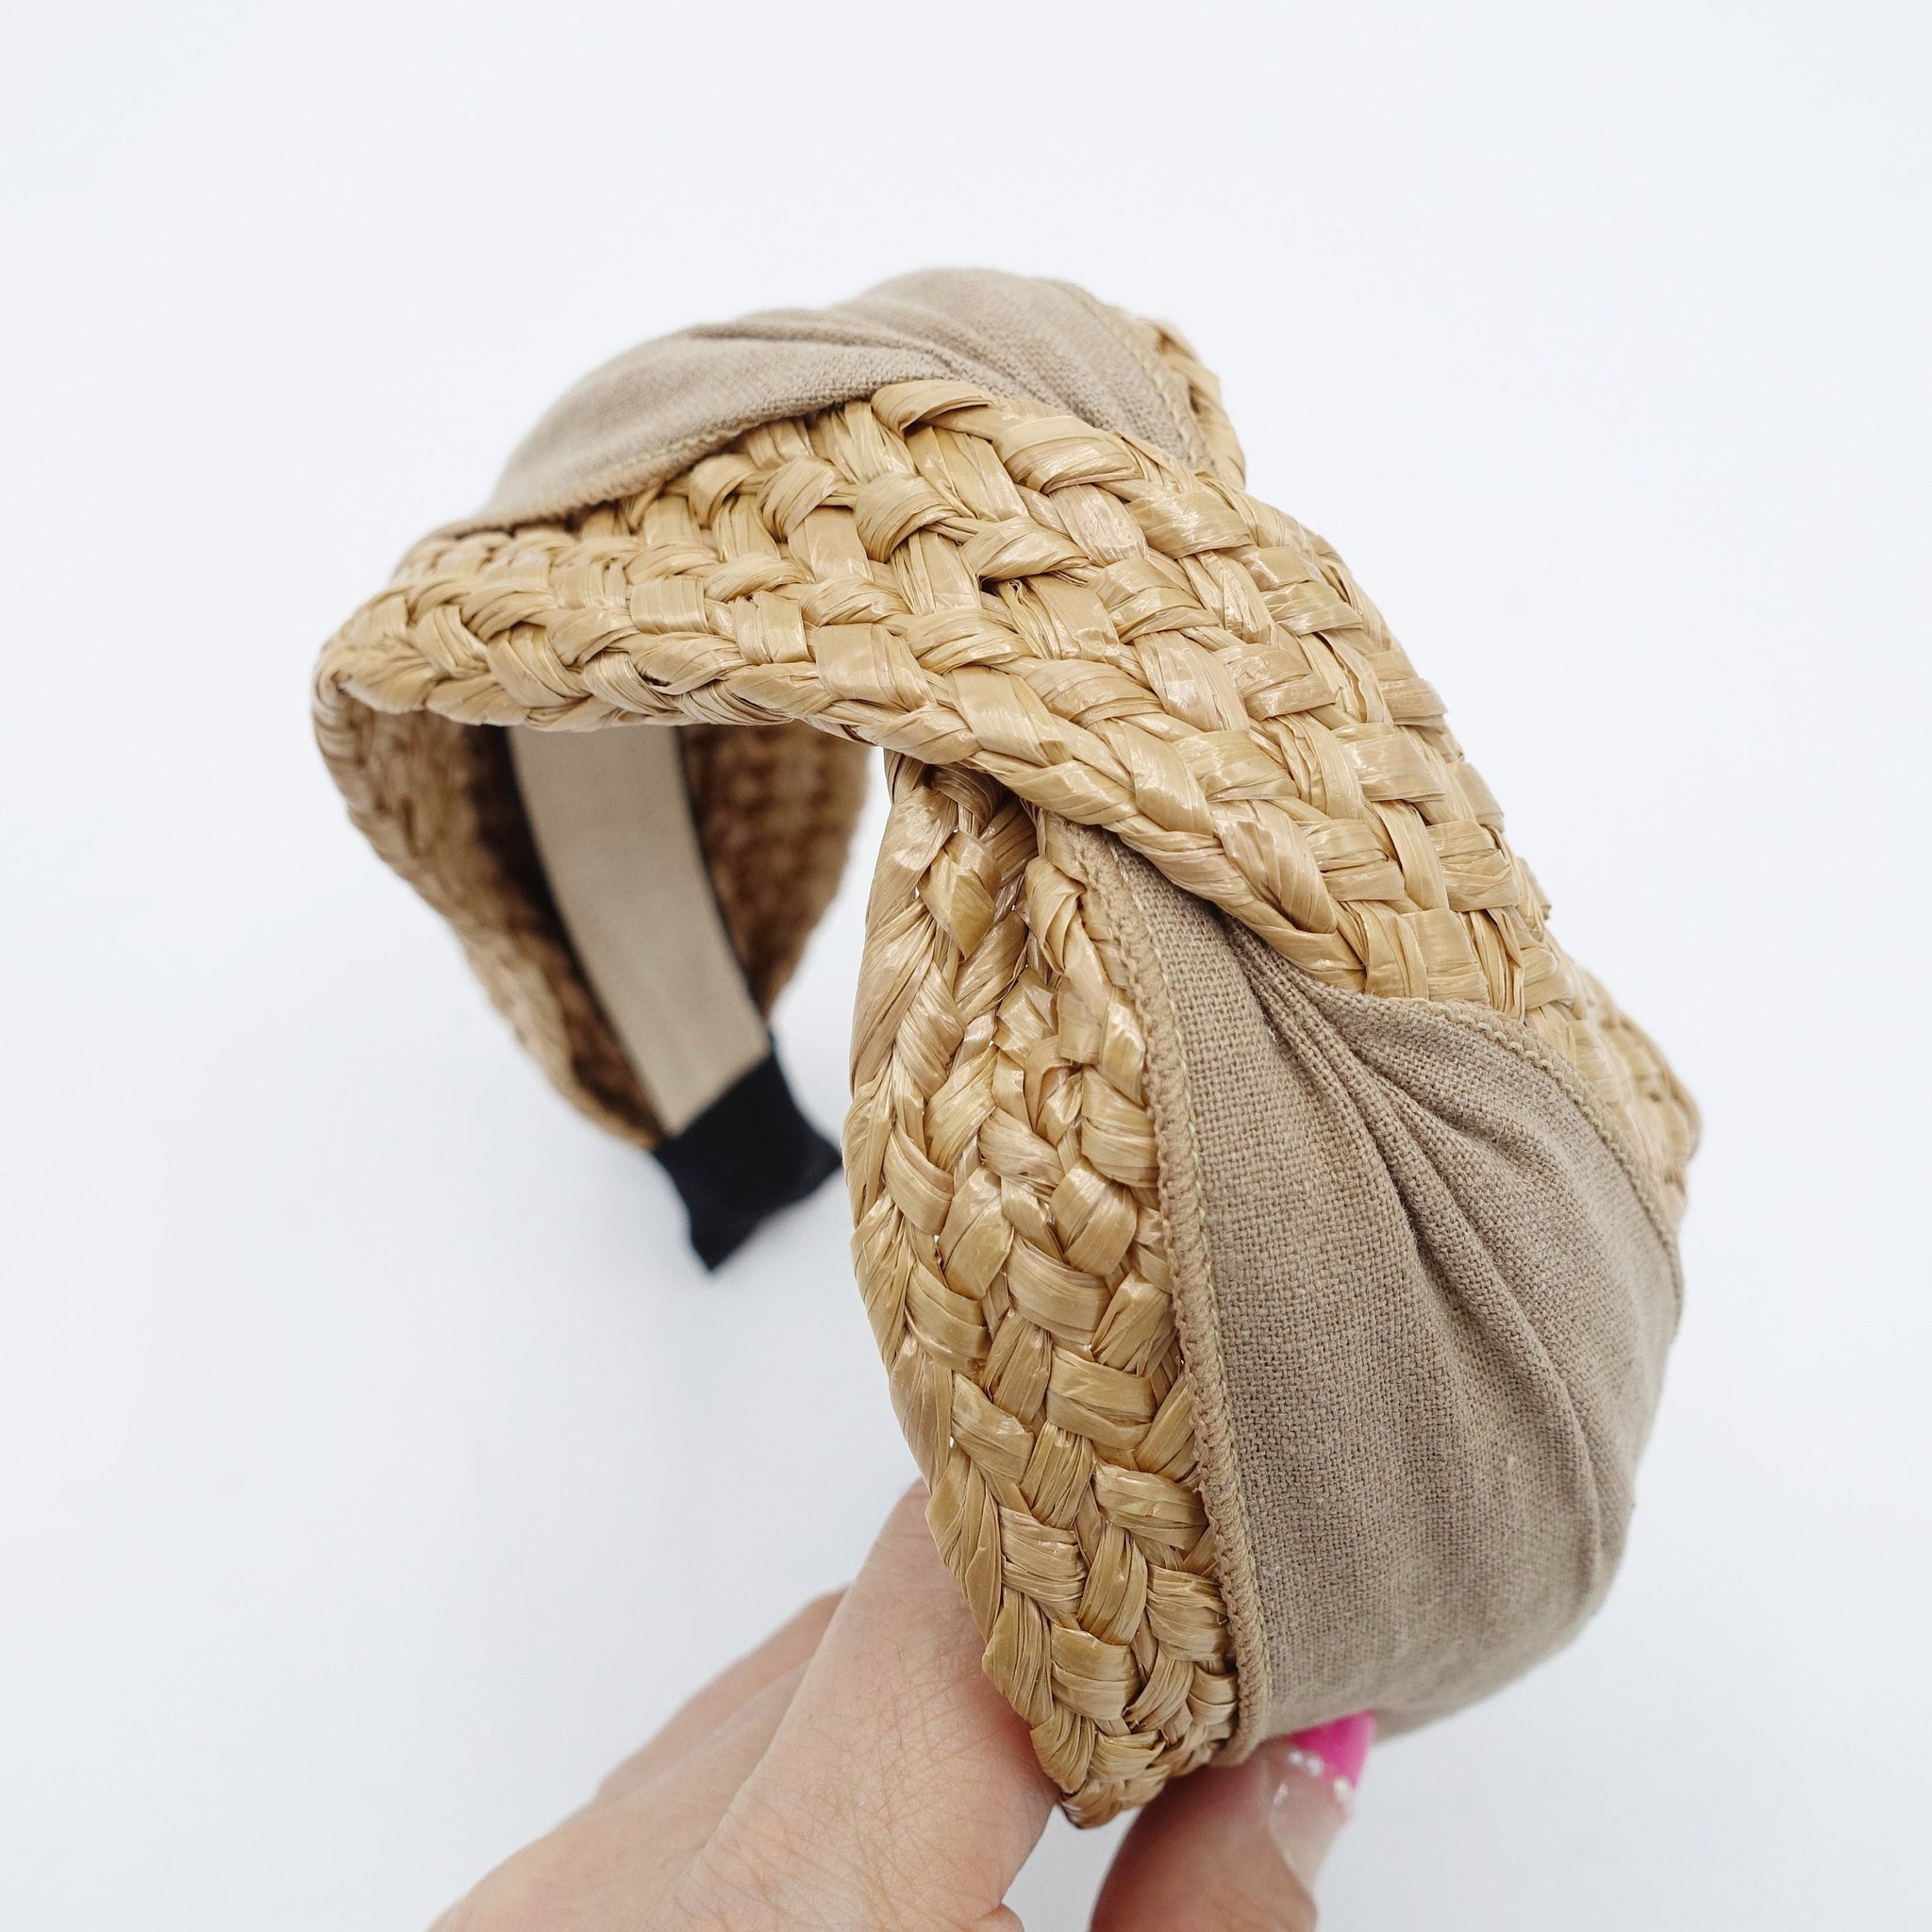 veryshine.com Headband Beige rattan cross headband fabric layered straw hairband Summer holiday hair accessory for women